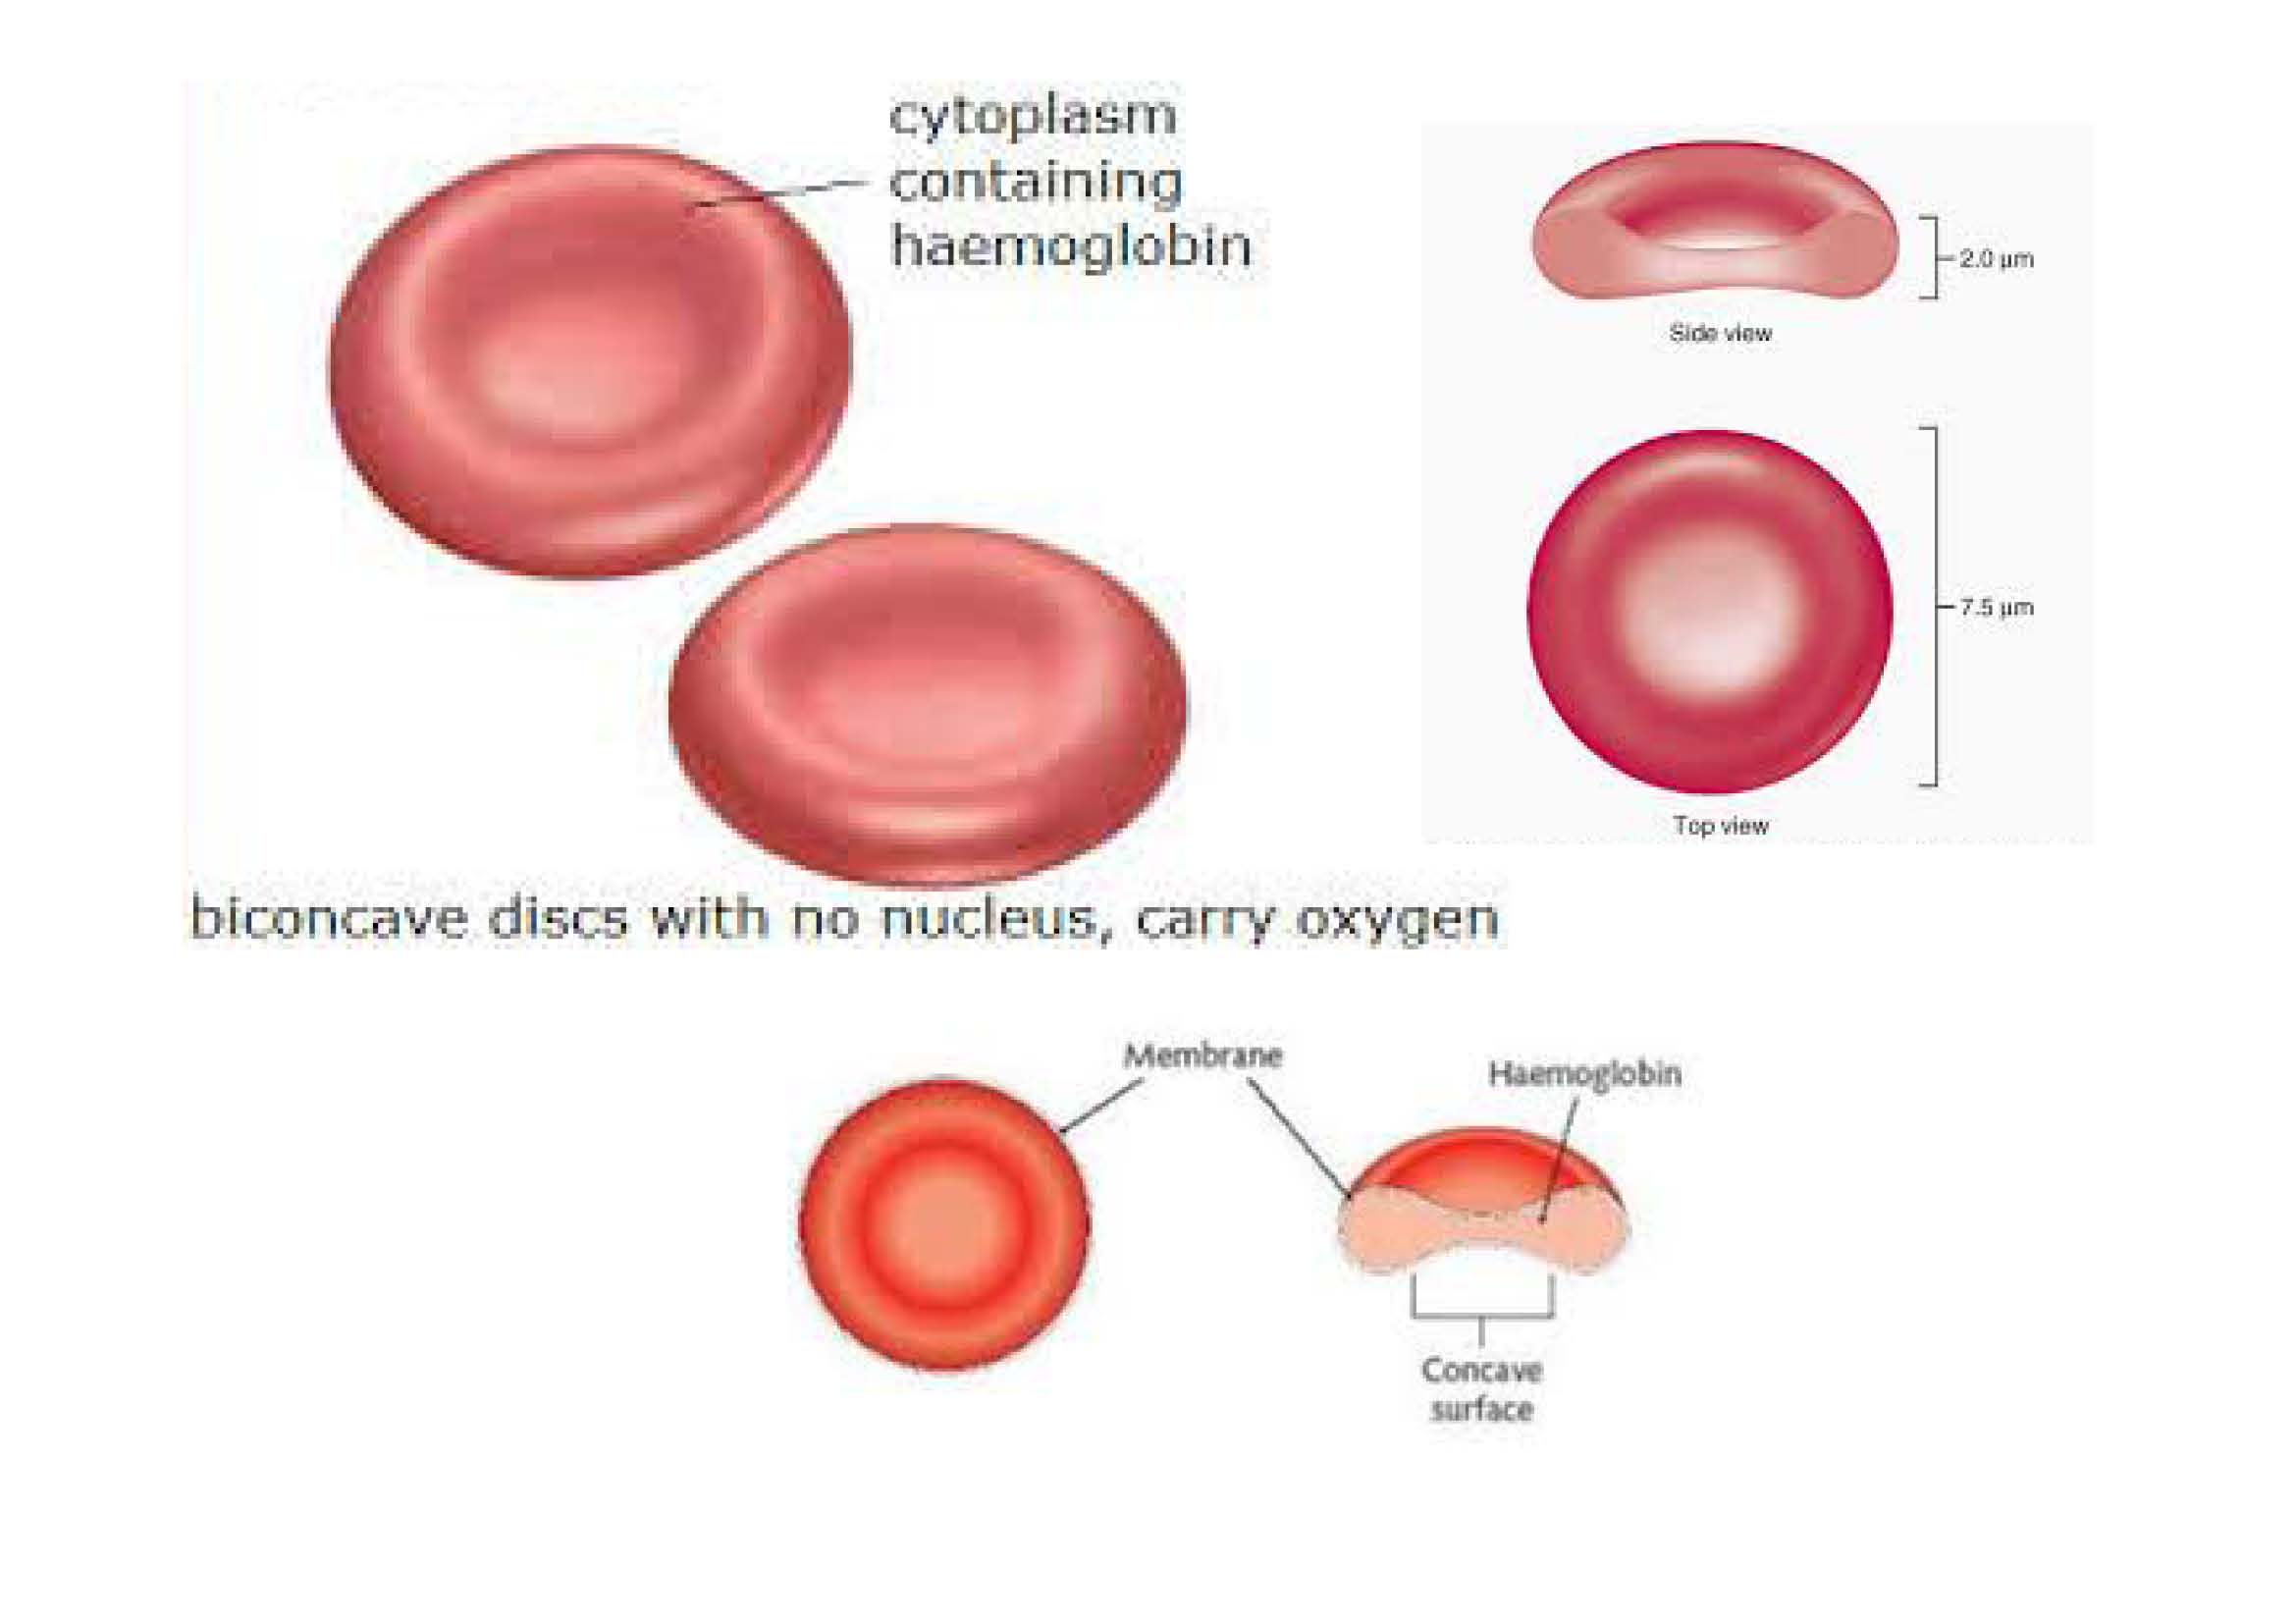 http://roslistonastronomy.uk/red-blood-cells-zeiss-im-microscope-1442017